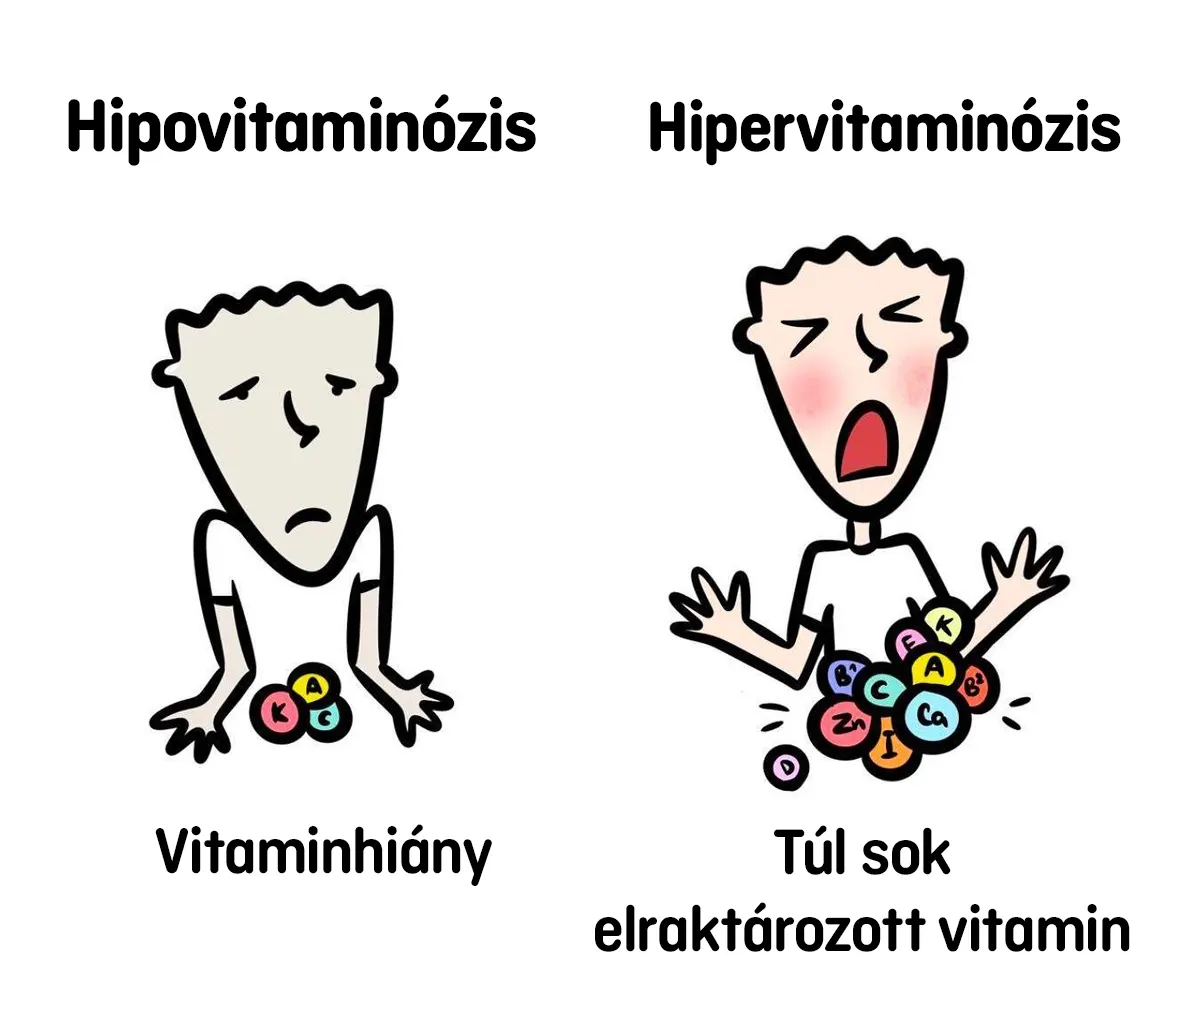 Hipovitaminózis vs Hipervitaminózis